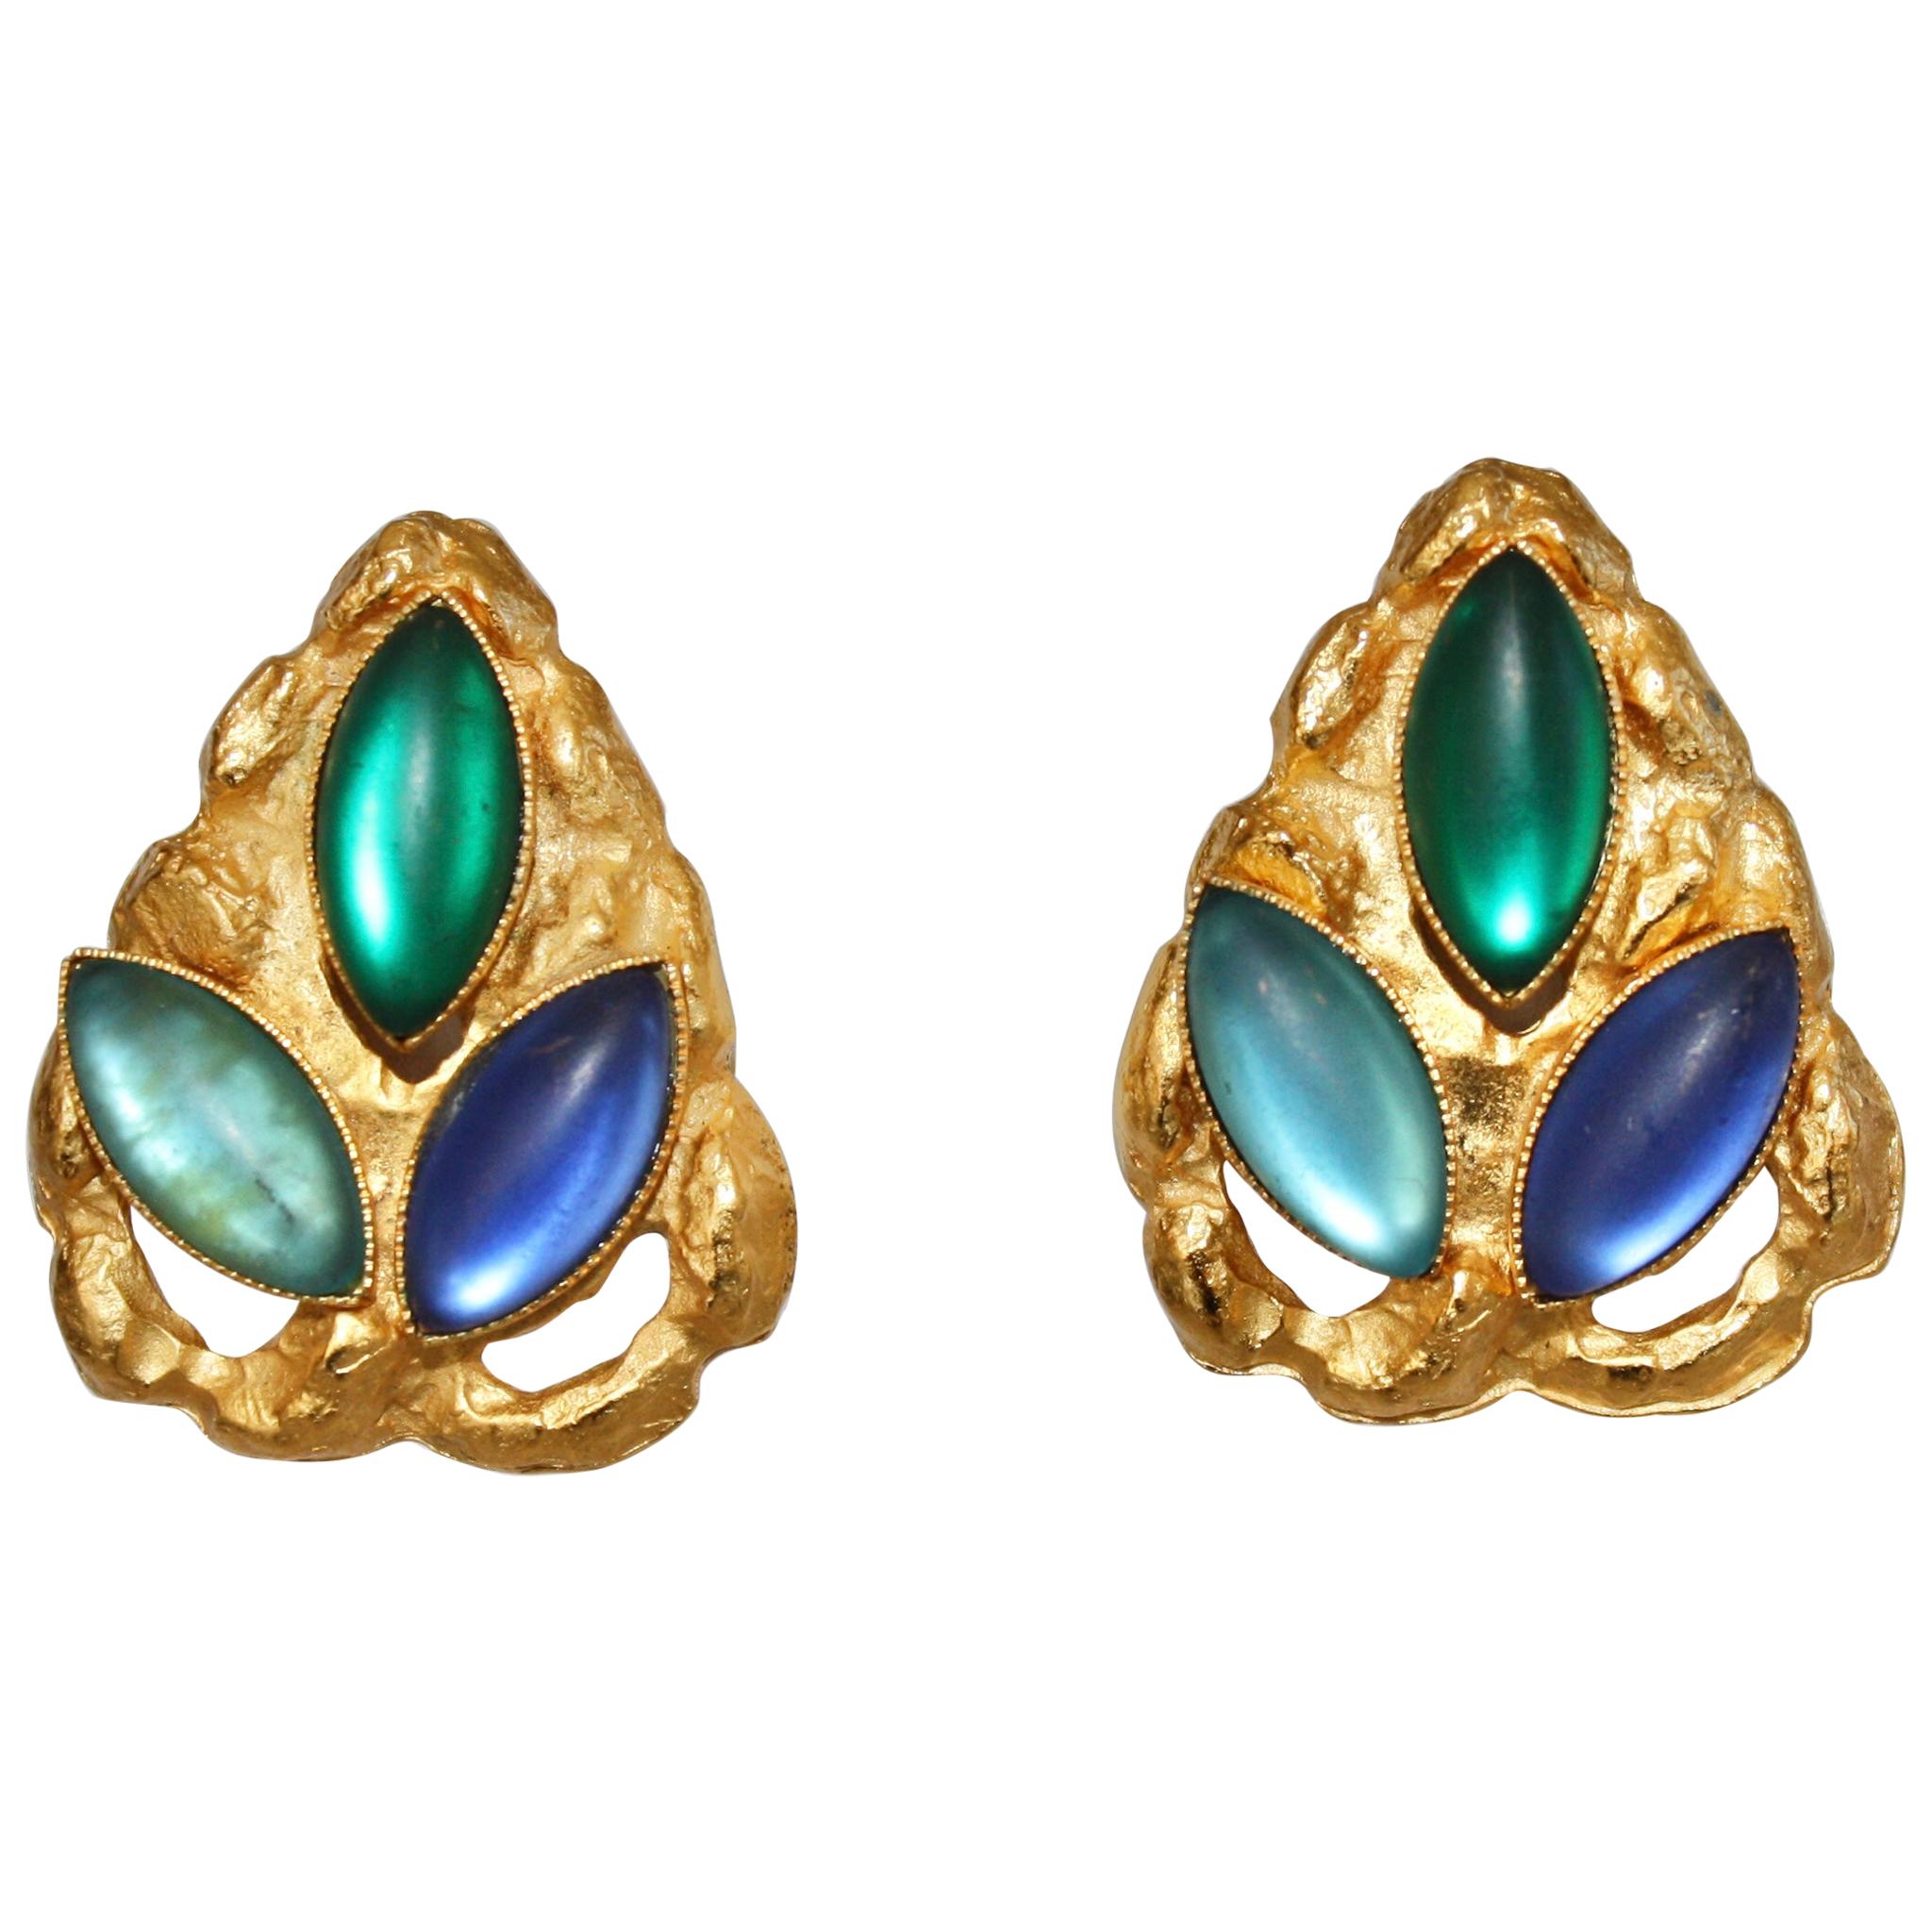 Carole St Germes Vintage Stone Clip Earrings